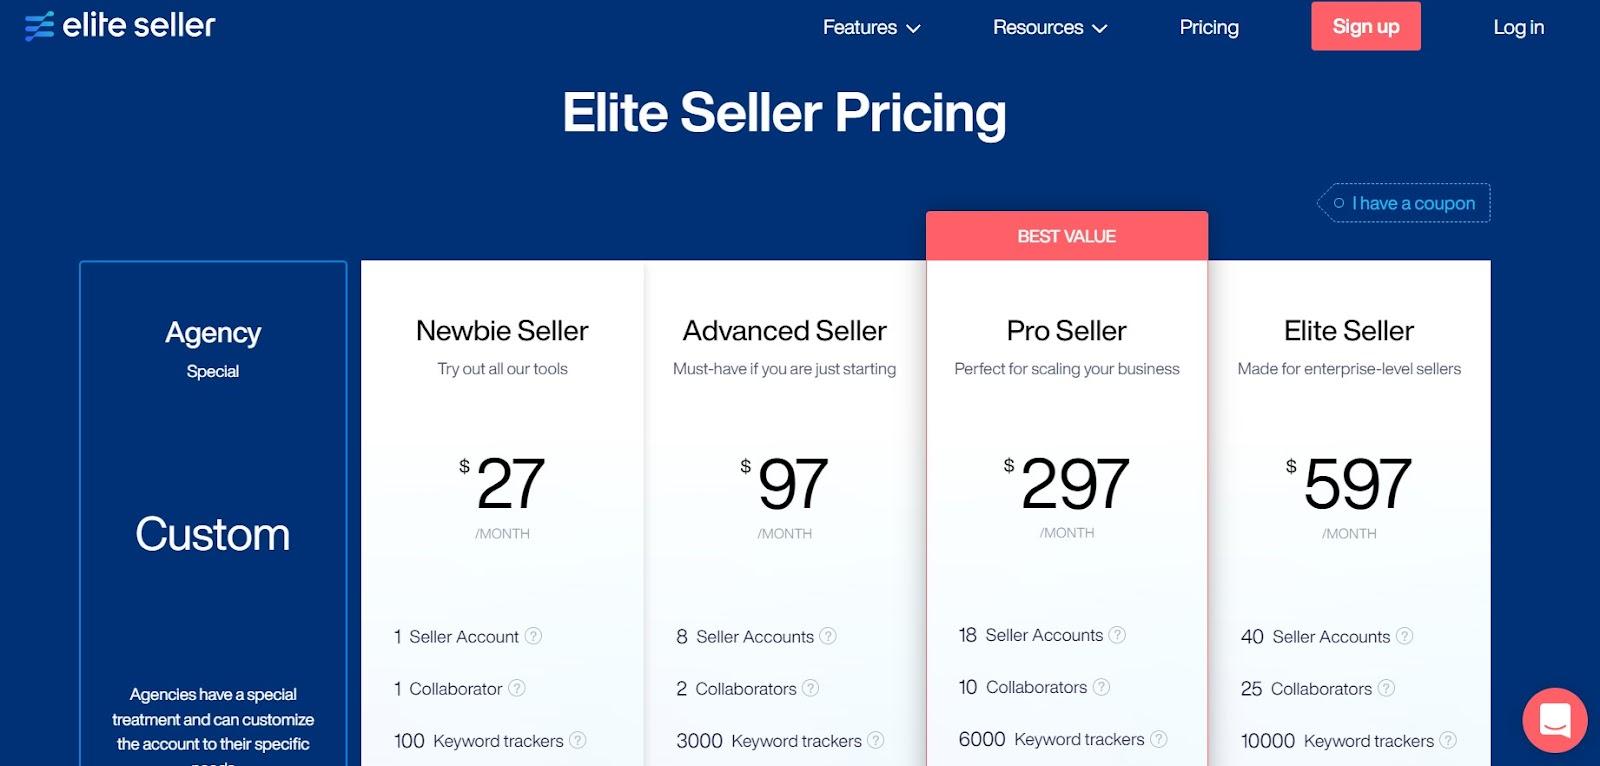 Elite Seller Pricing